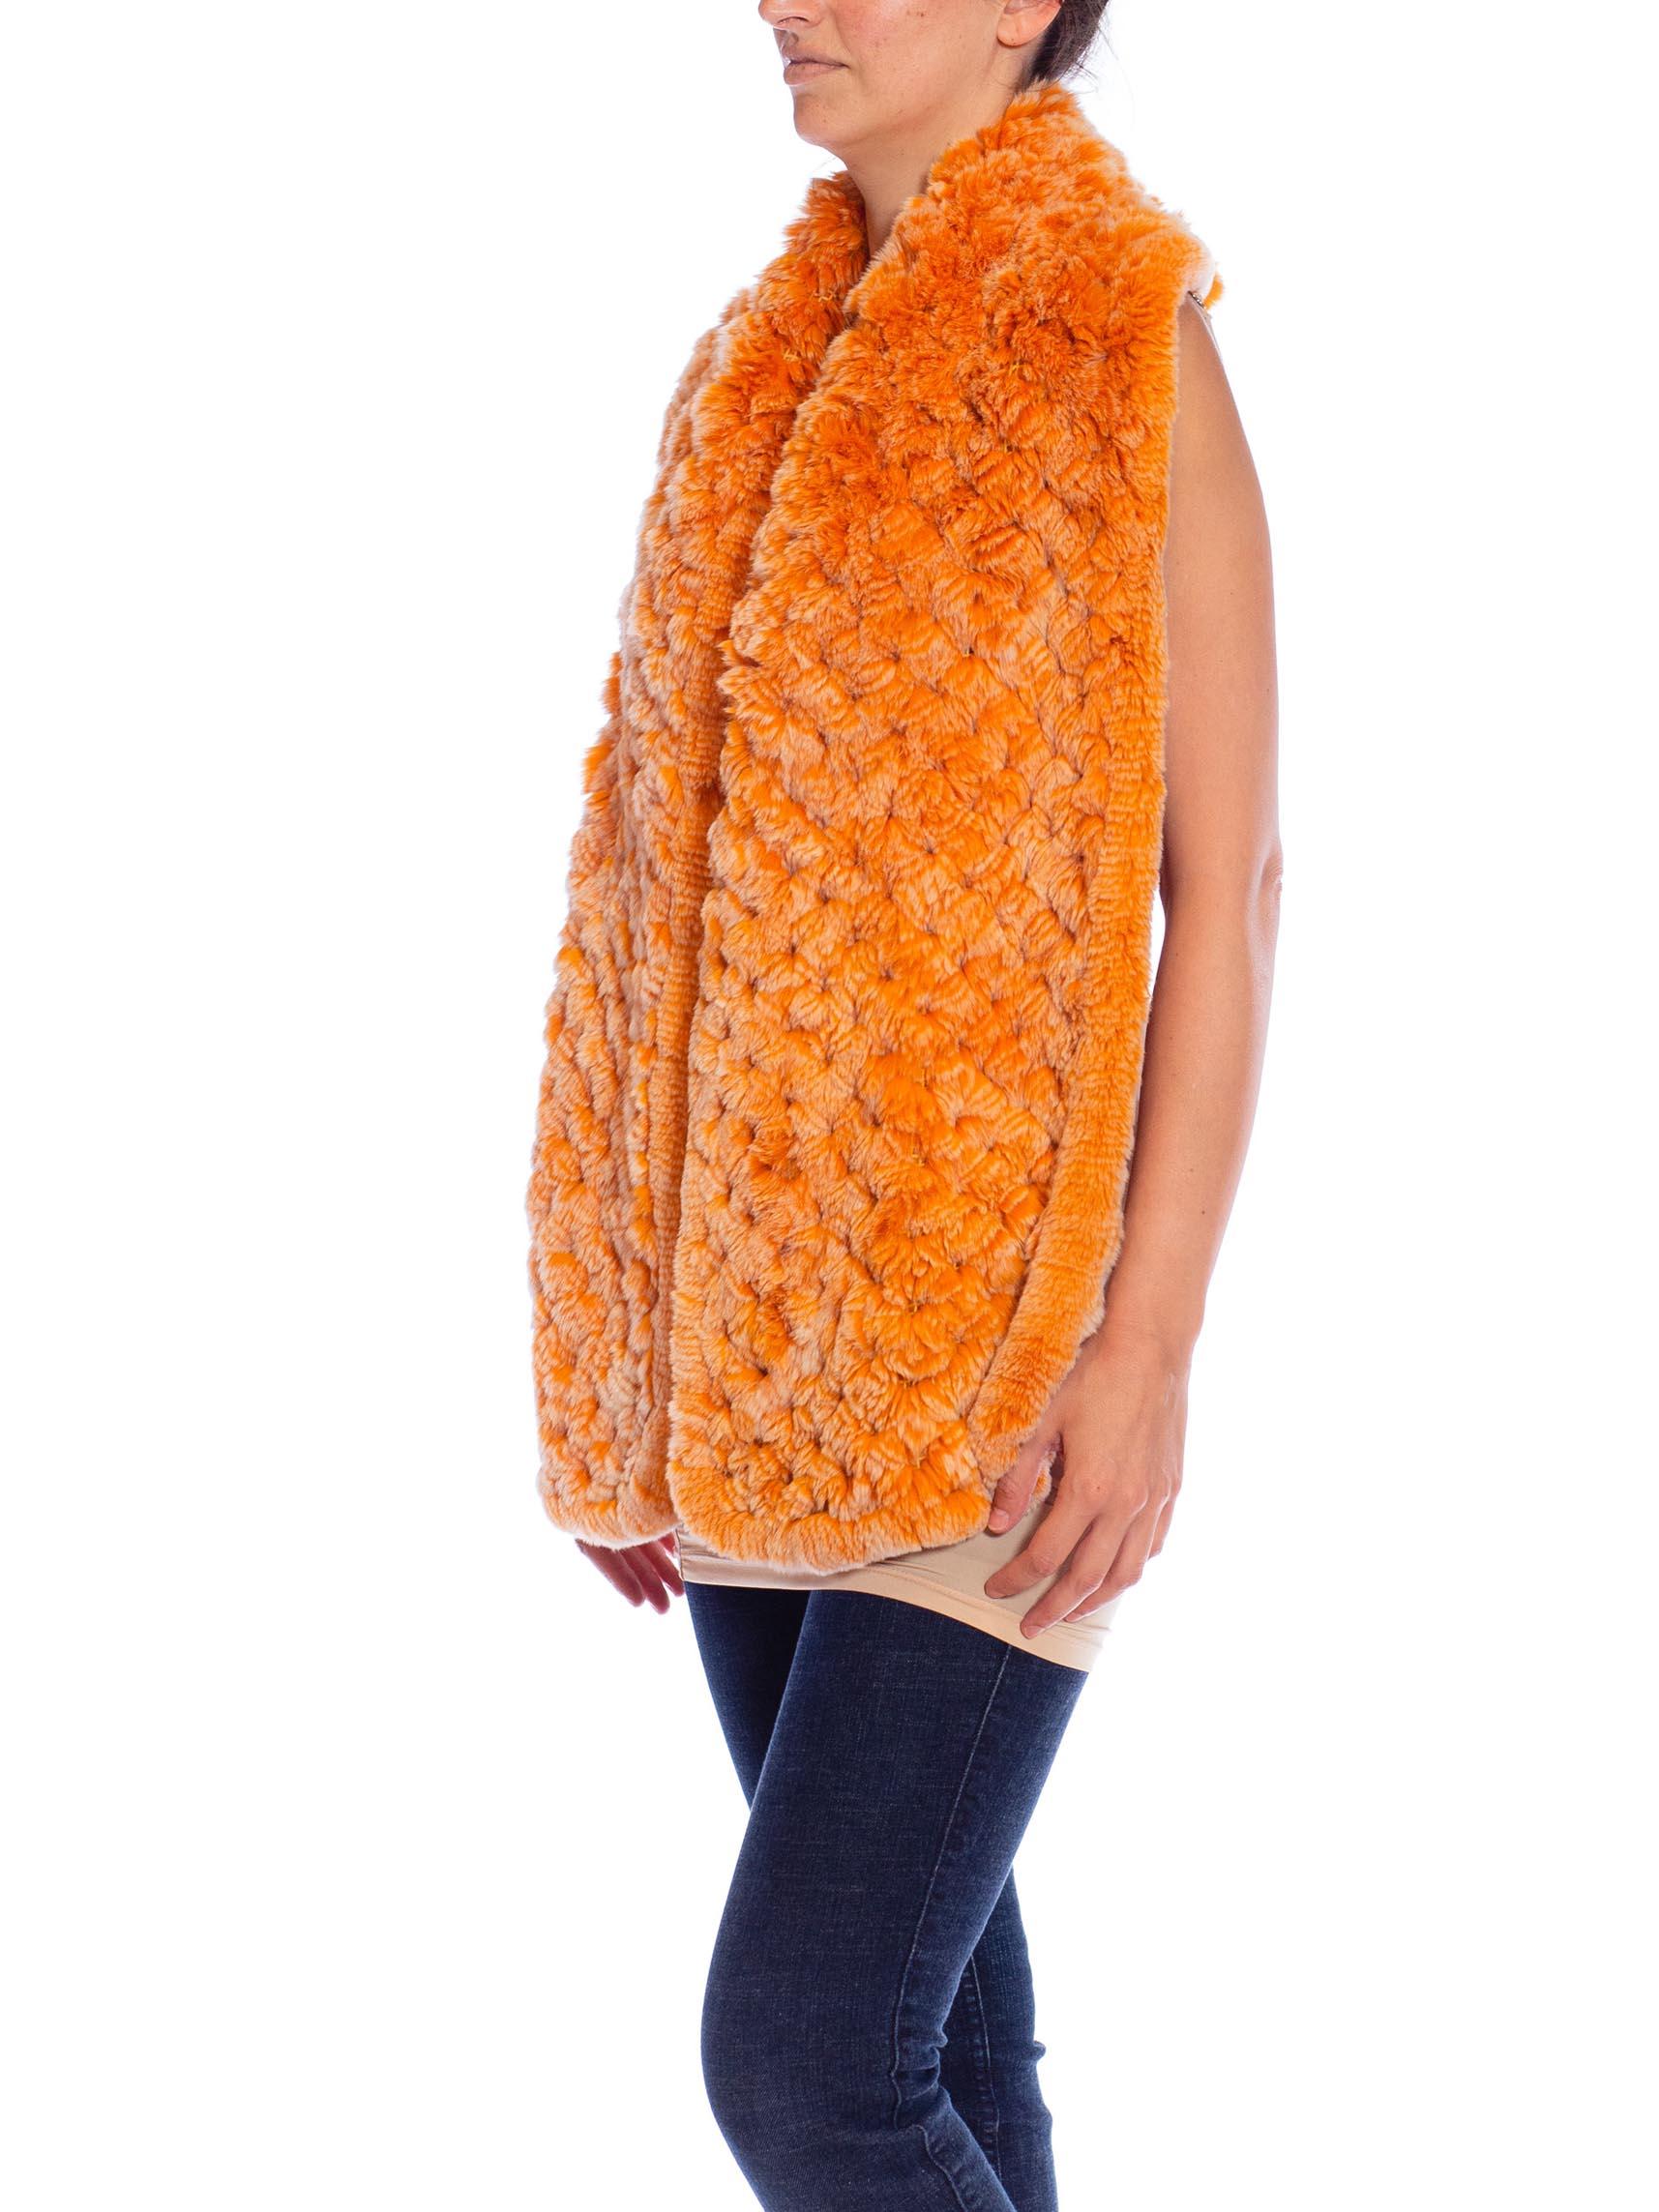 orange fur shawl